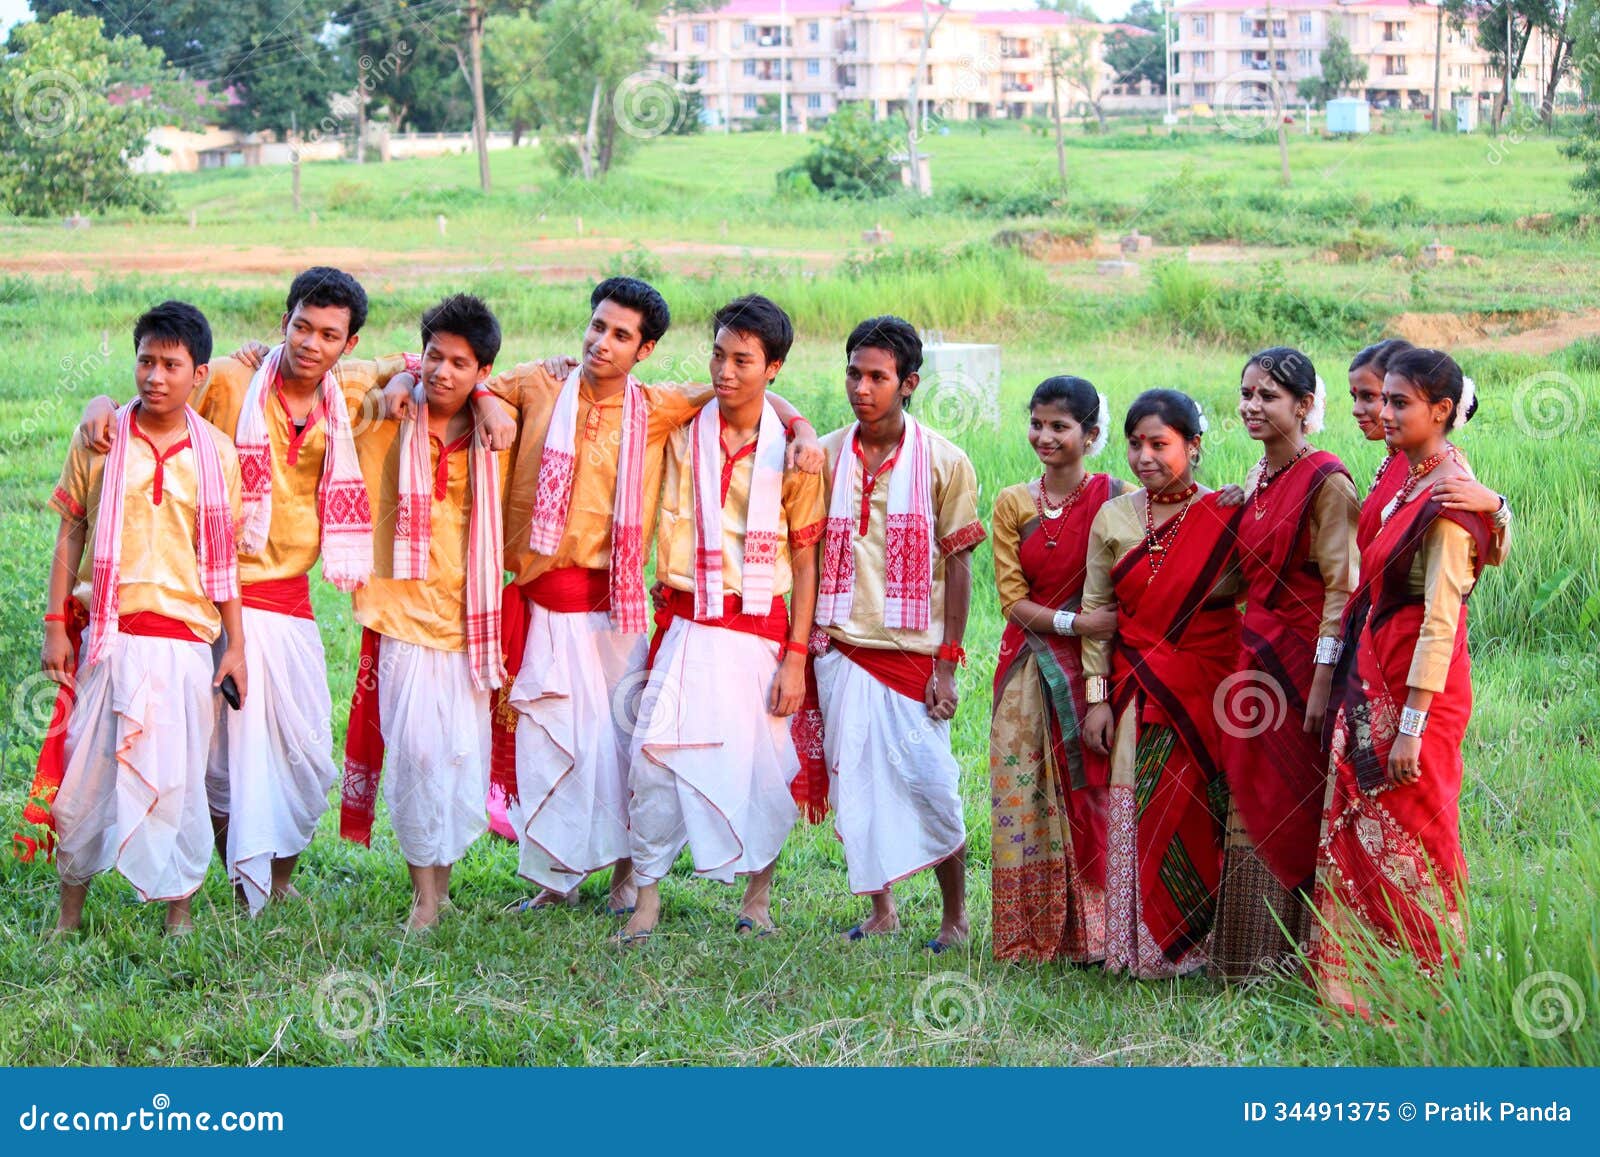 File:Assamese traditional costumes.jpg - Wikipedia